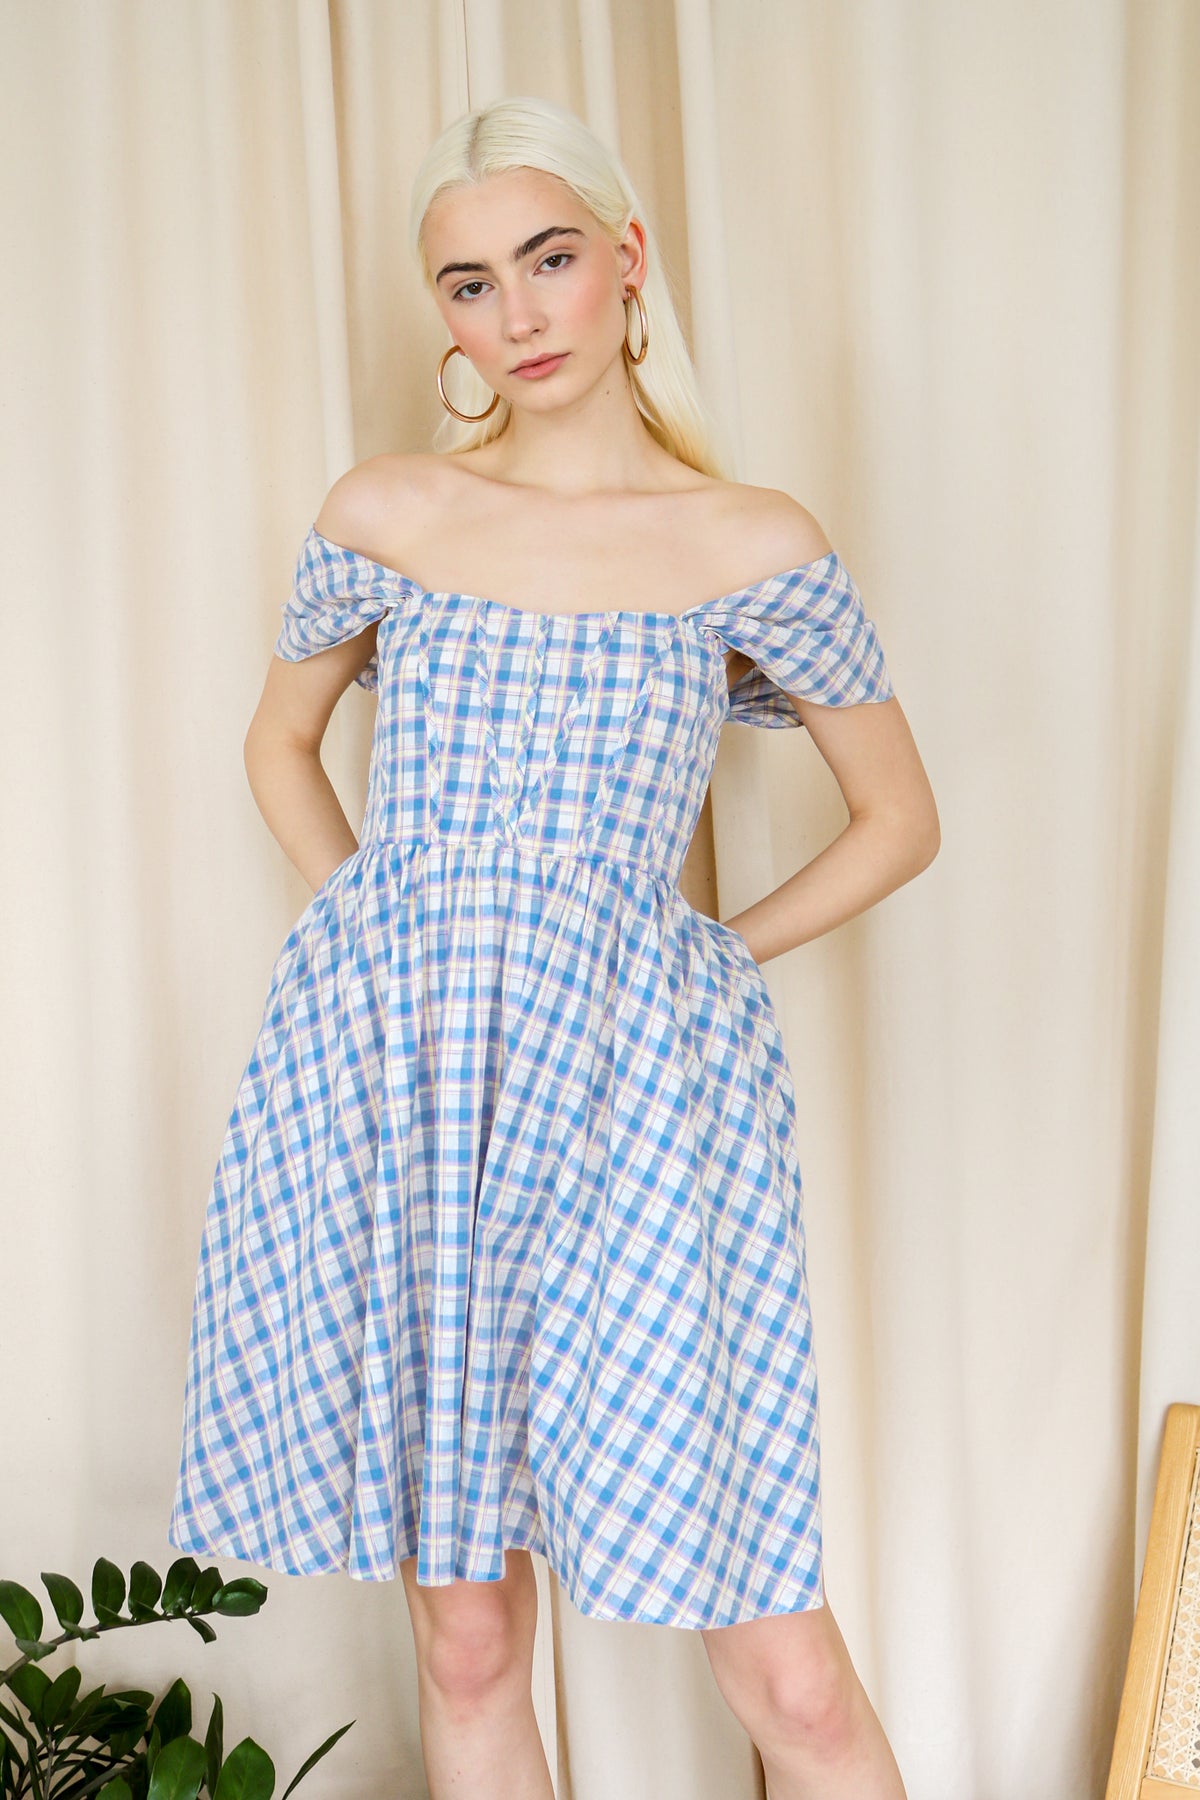 Model wearing the blue plaid off shoulder dress against a neutral background.